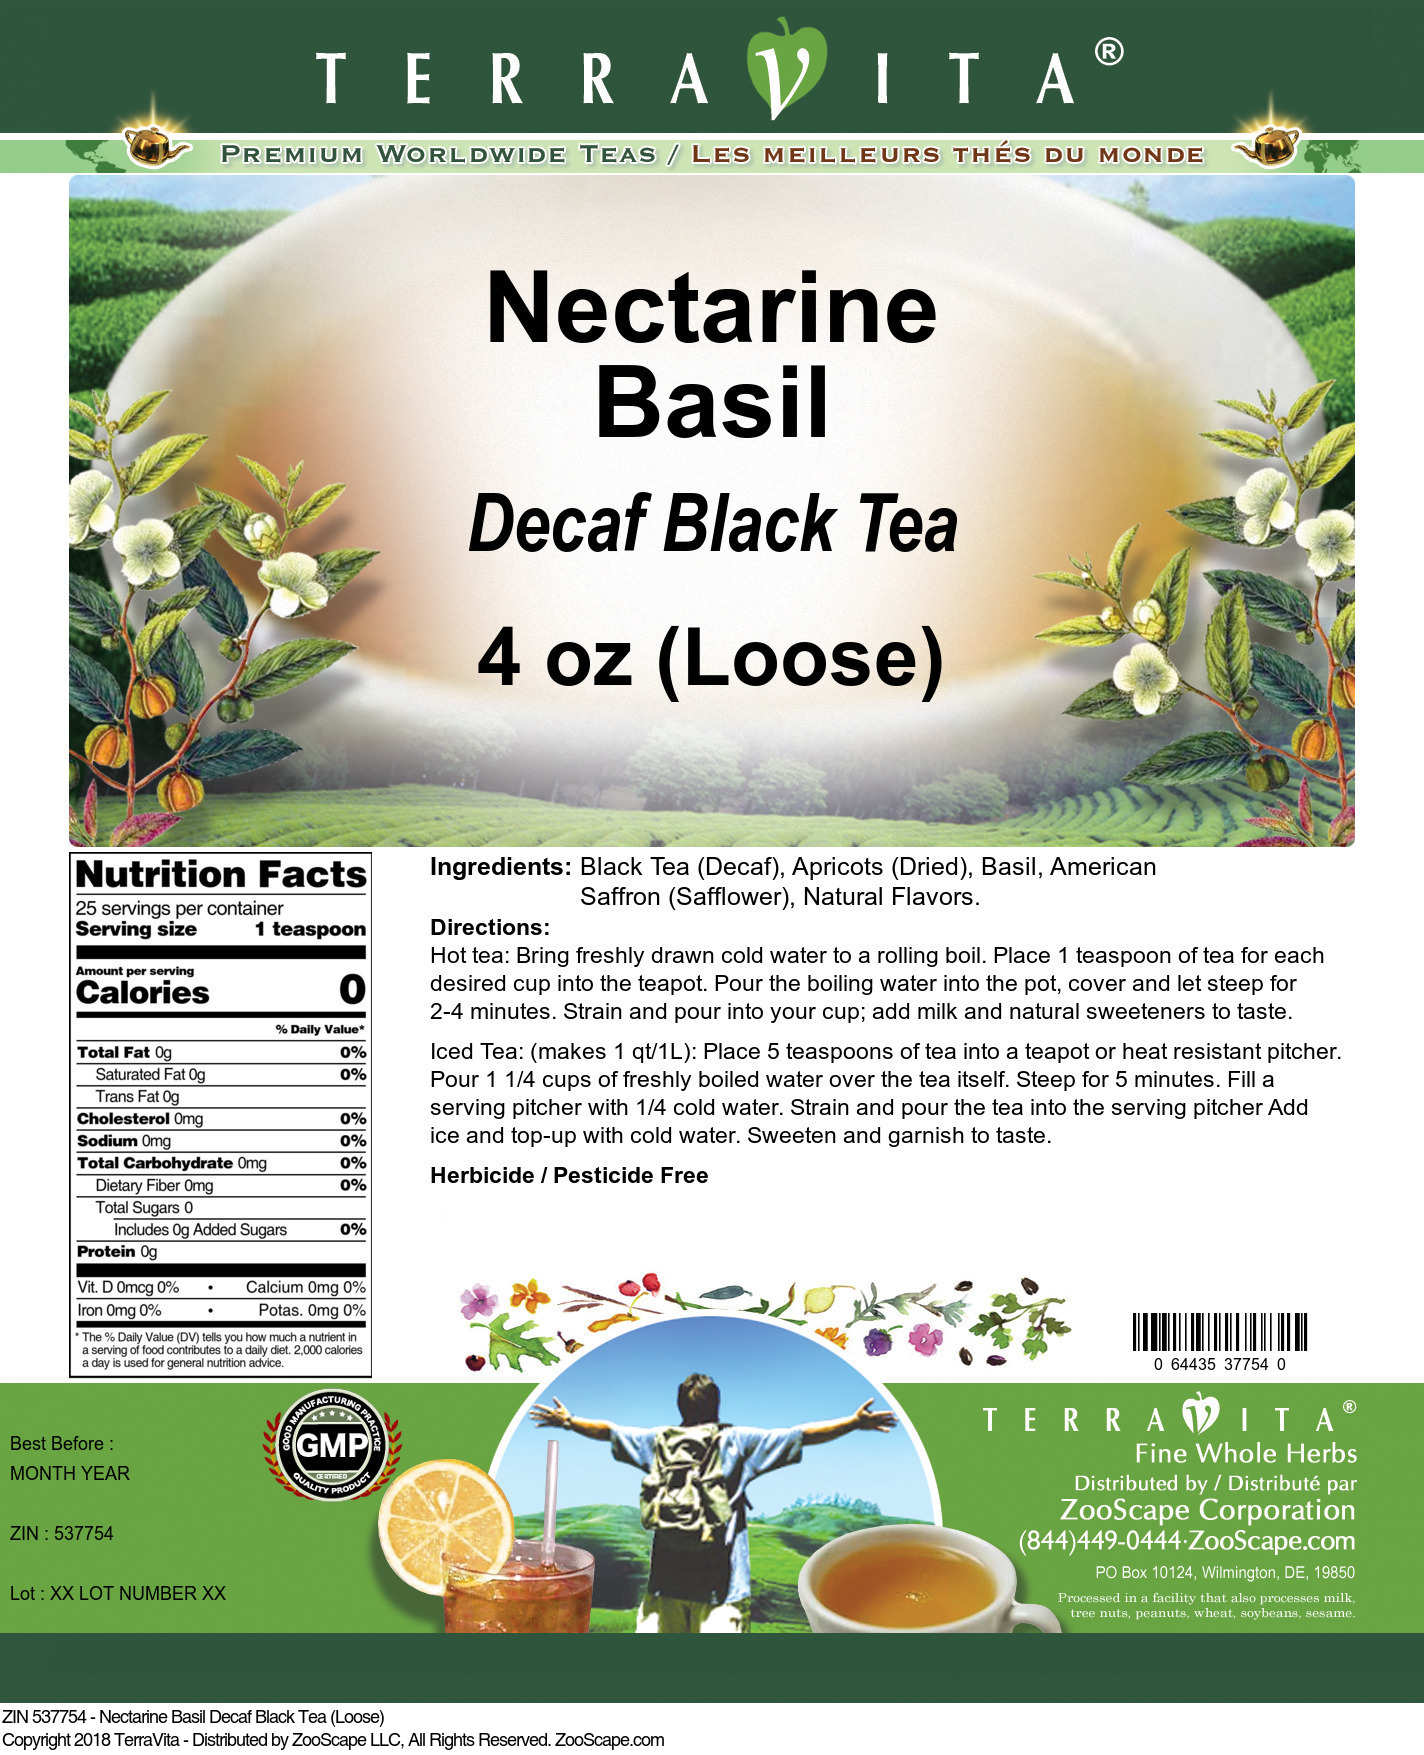 Nectarine Basil Decaf Black Tea (Loose) - Label